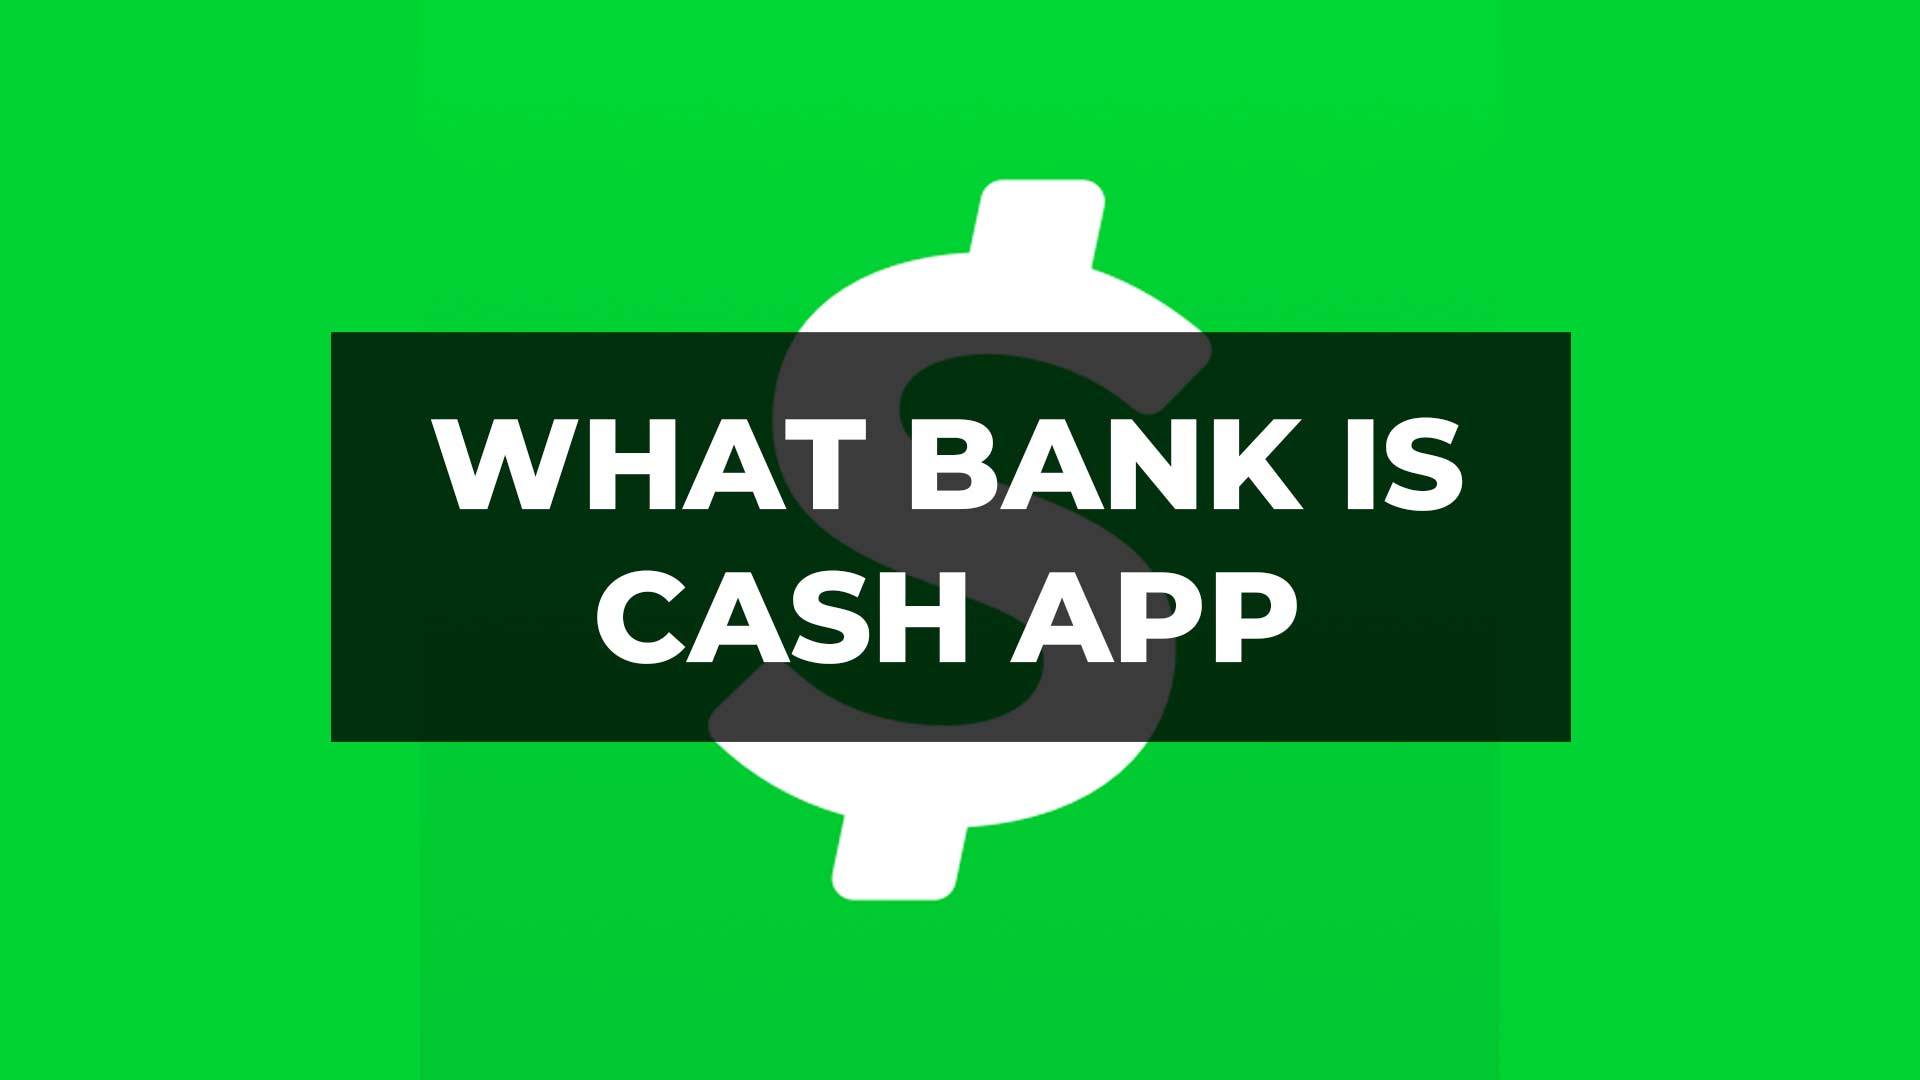 What Bank is Cash App